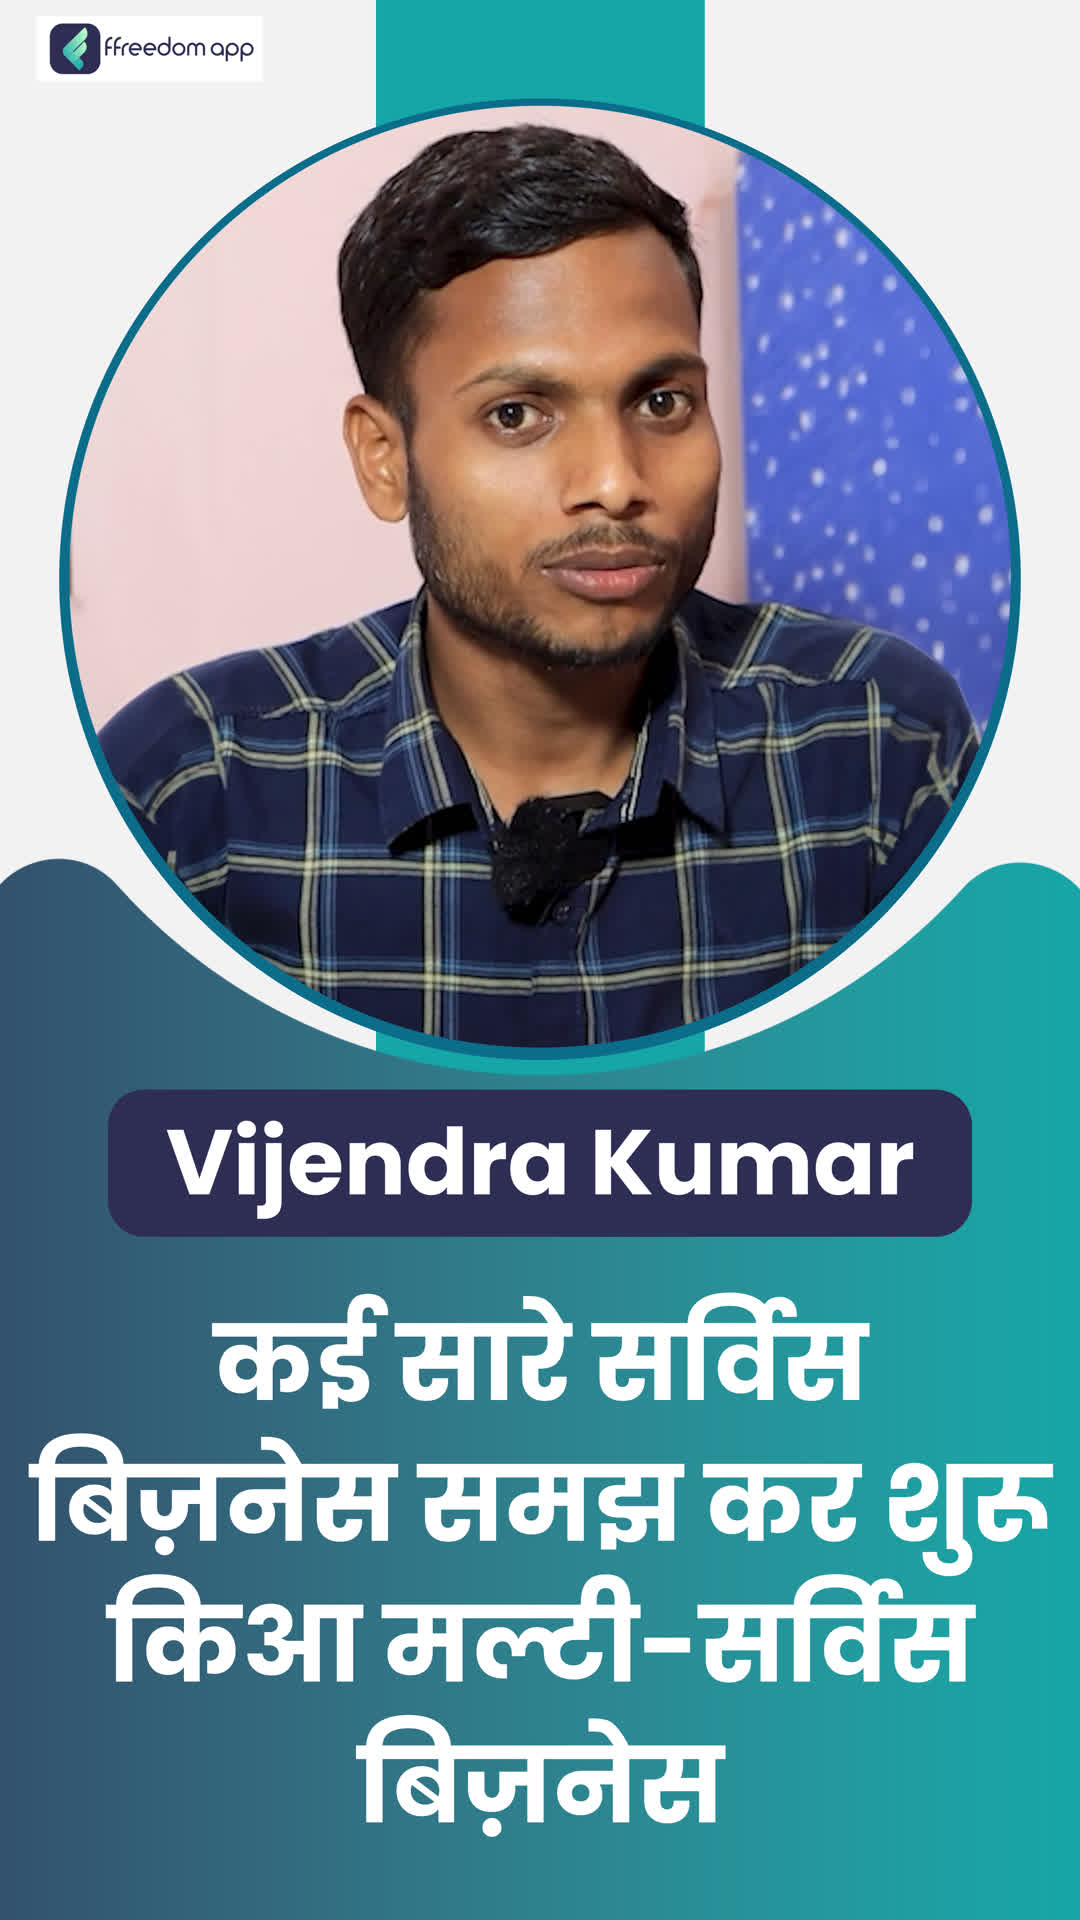 vijenravarma's Honest Review of ffreedom app - Hyderabad ,Telangana